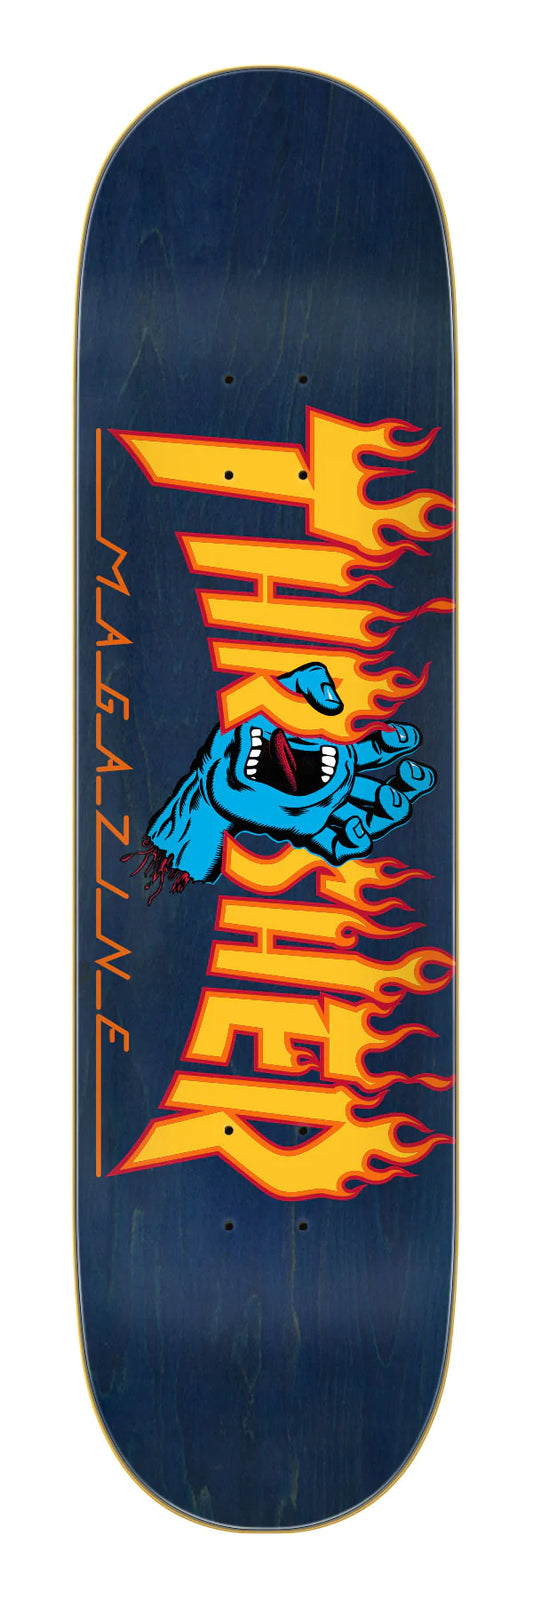 8.25in Thrasher Screaming Flame Logo Santa Cruz Skateboard Deck